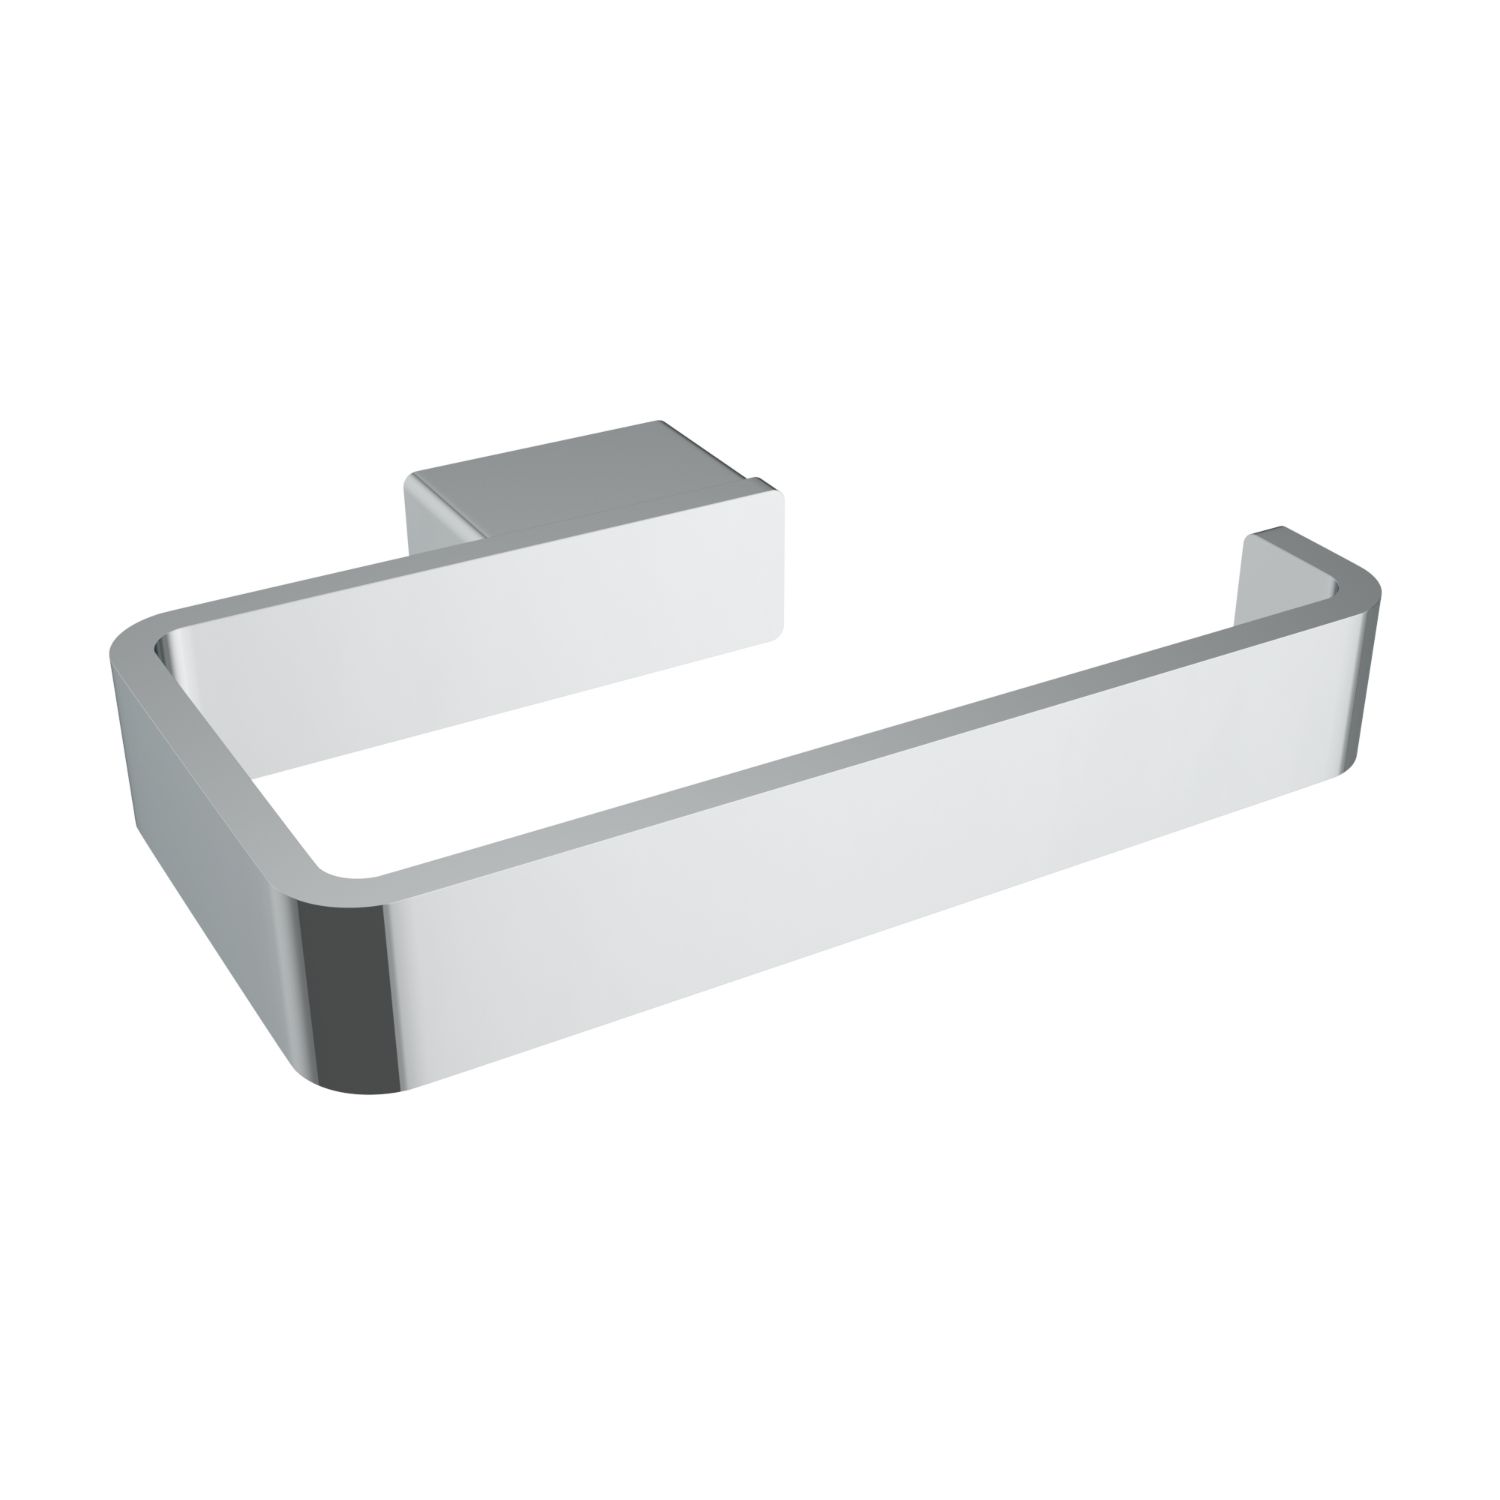 ICO Bath V3033 Cinder Toilet Paper Holder - Chrome (LH Post)